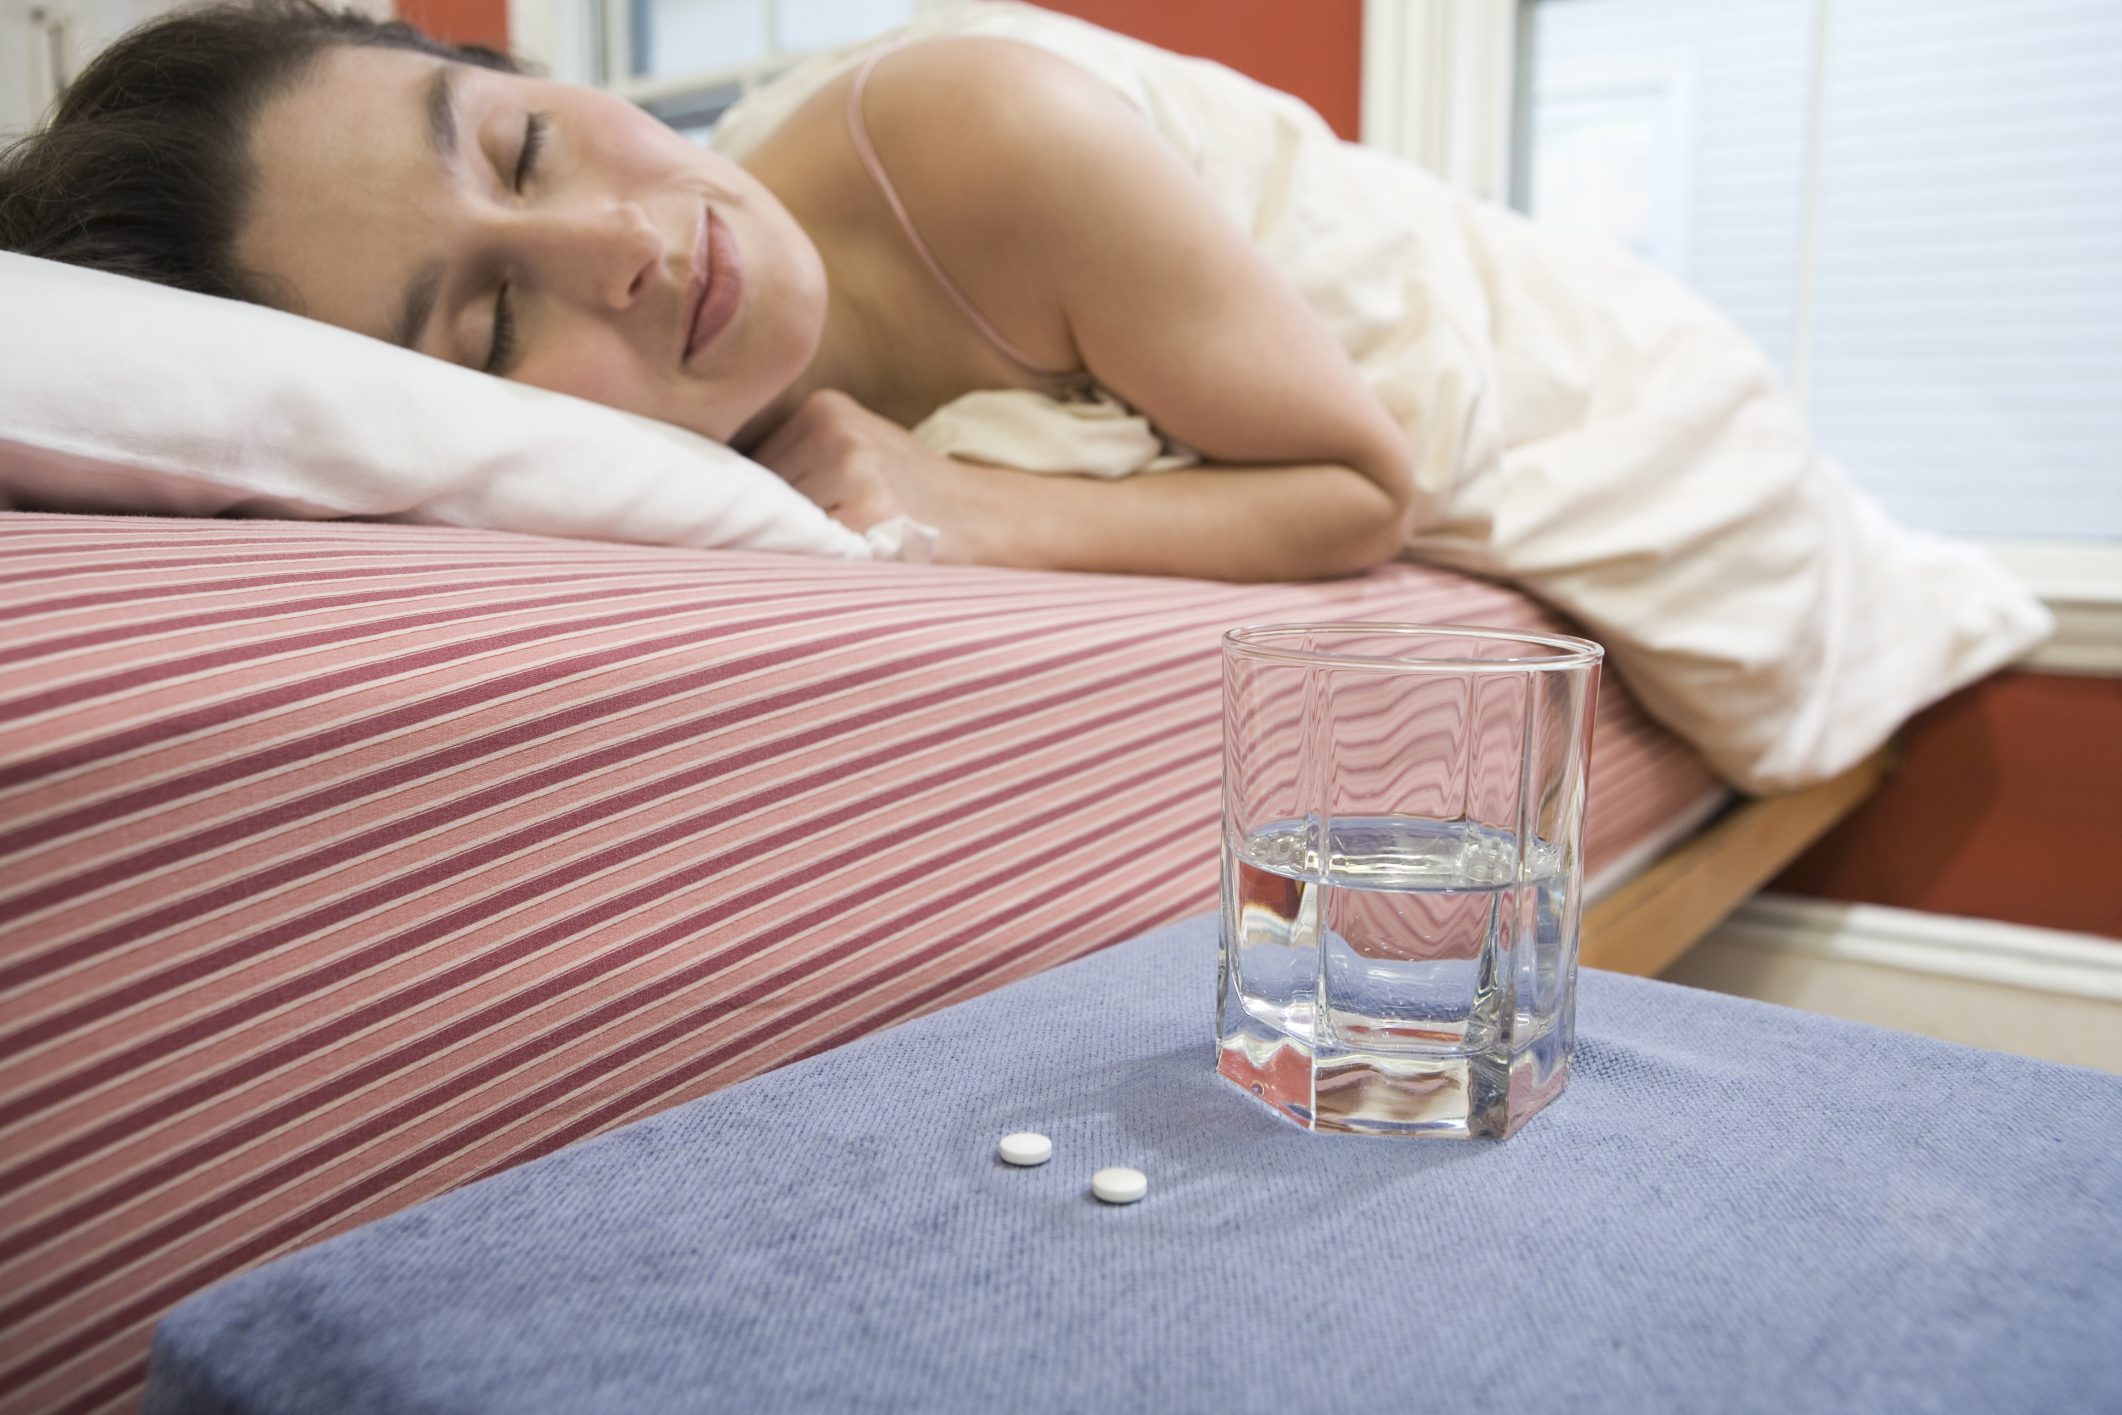 eHealth_Aug 6 2015_news _sleep medication doses and insomnia_marji